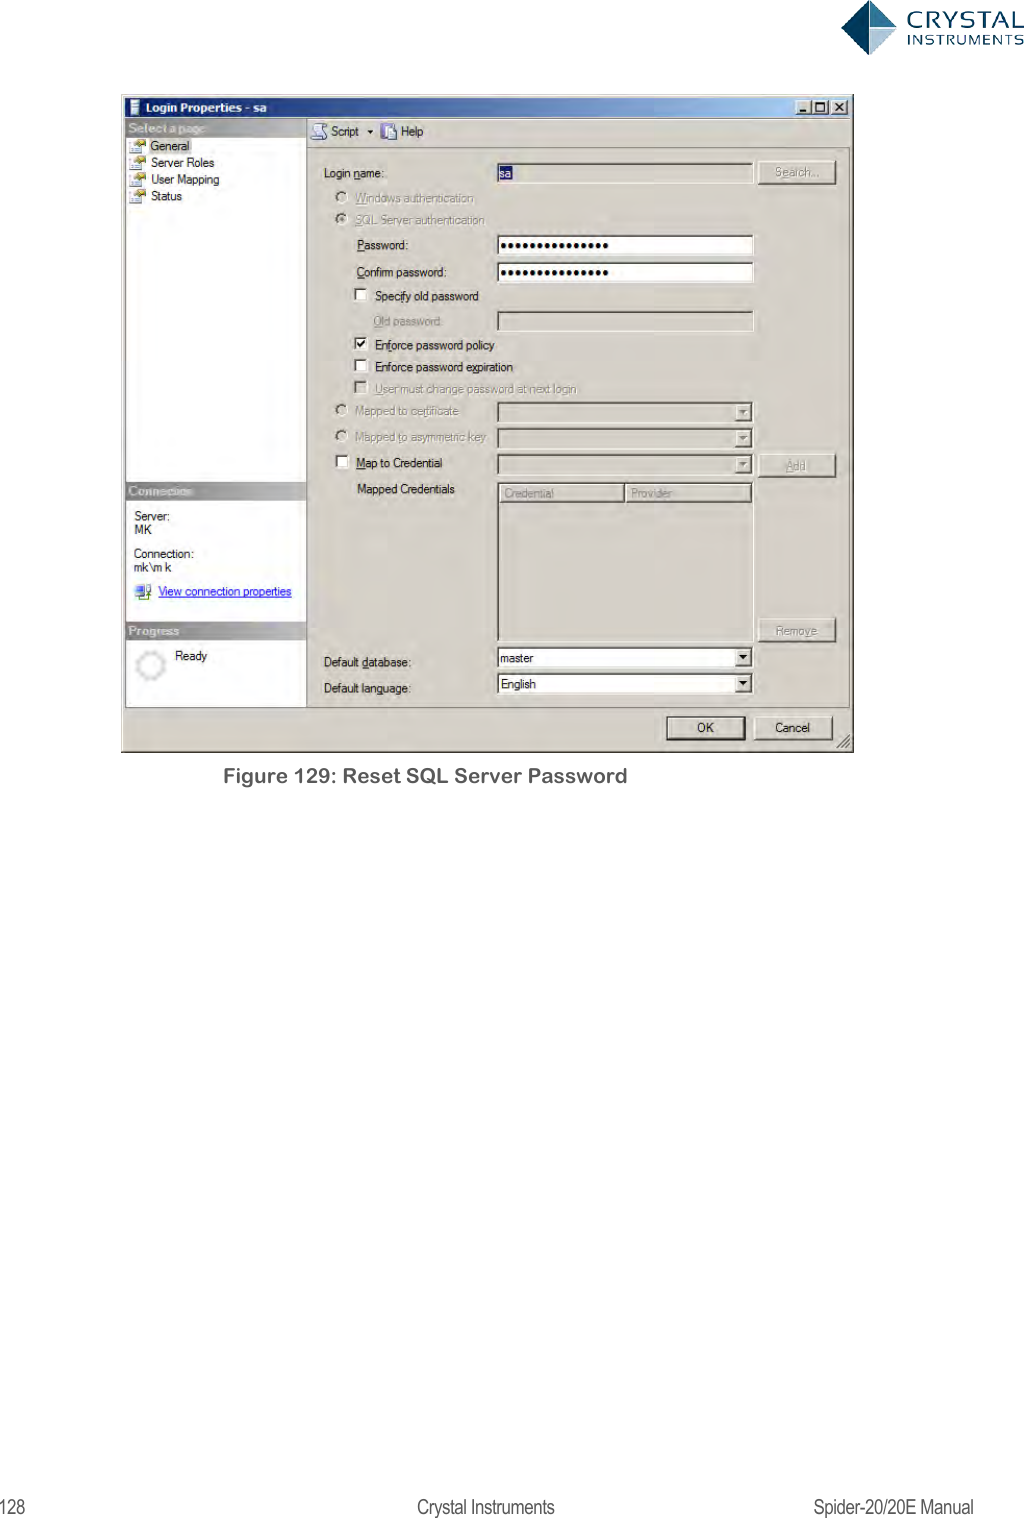  128  Crystal Instruments  Spider-20/20E Manual  Figure 129: Reset SQL Server Password   